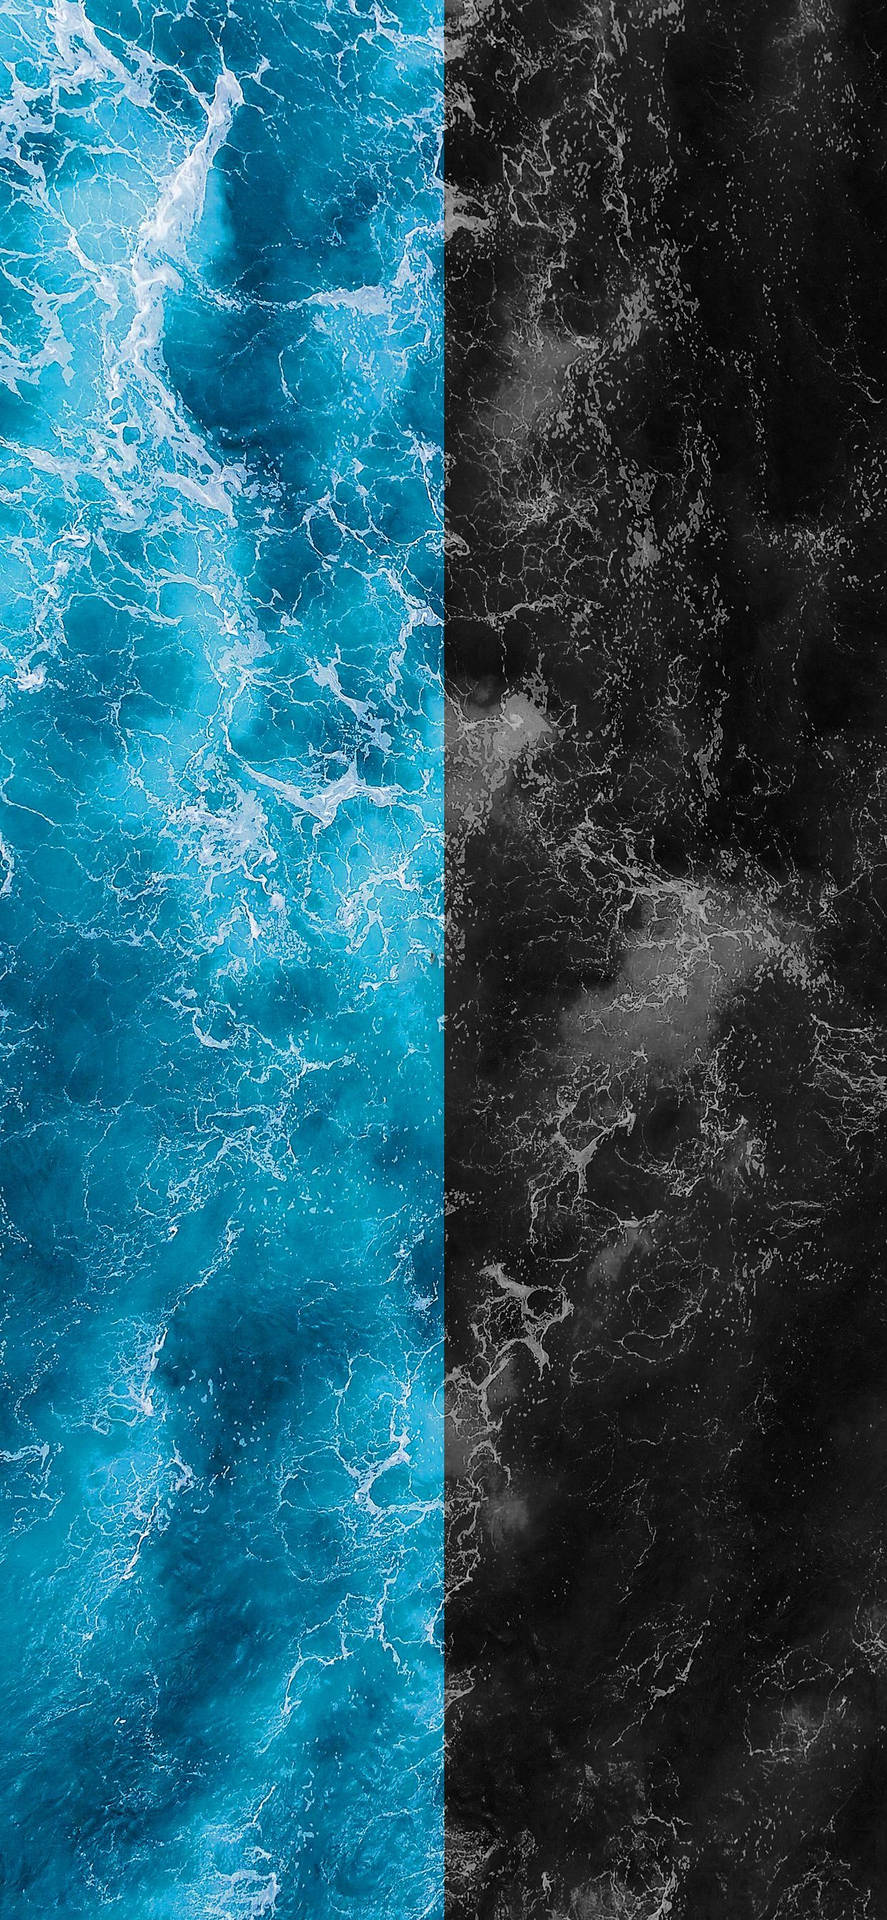 A Split Of Blue And Black Oceans Wallpaper